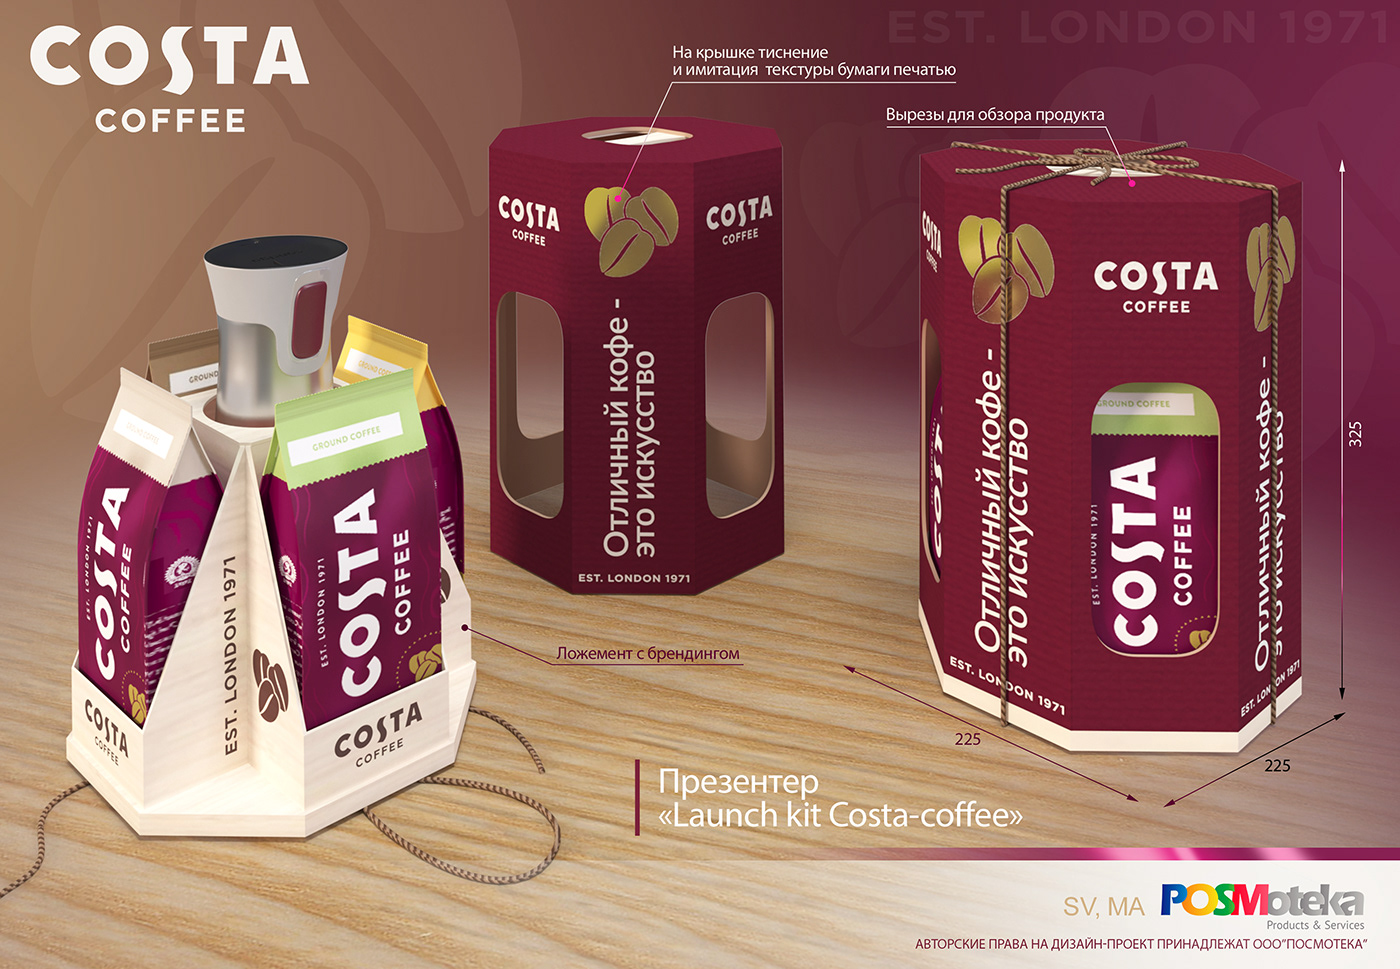 Coffee Costa Food  posm POSM design posmaterials ПОСМ